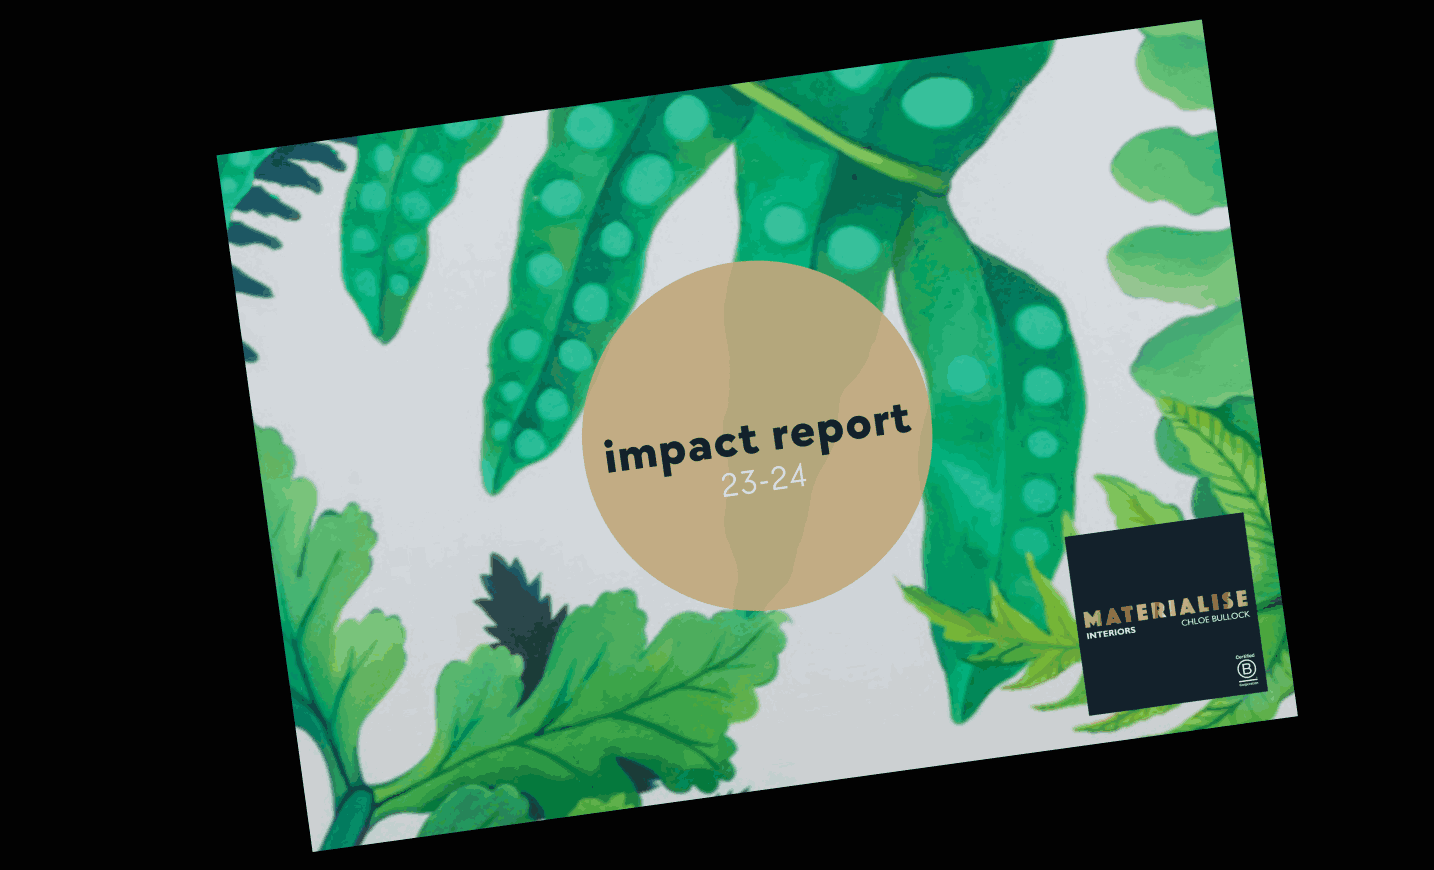 B Corp Impact Report 23-24